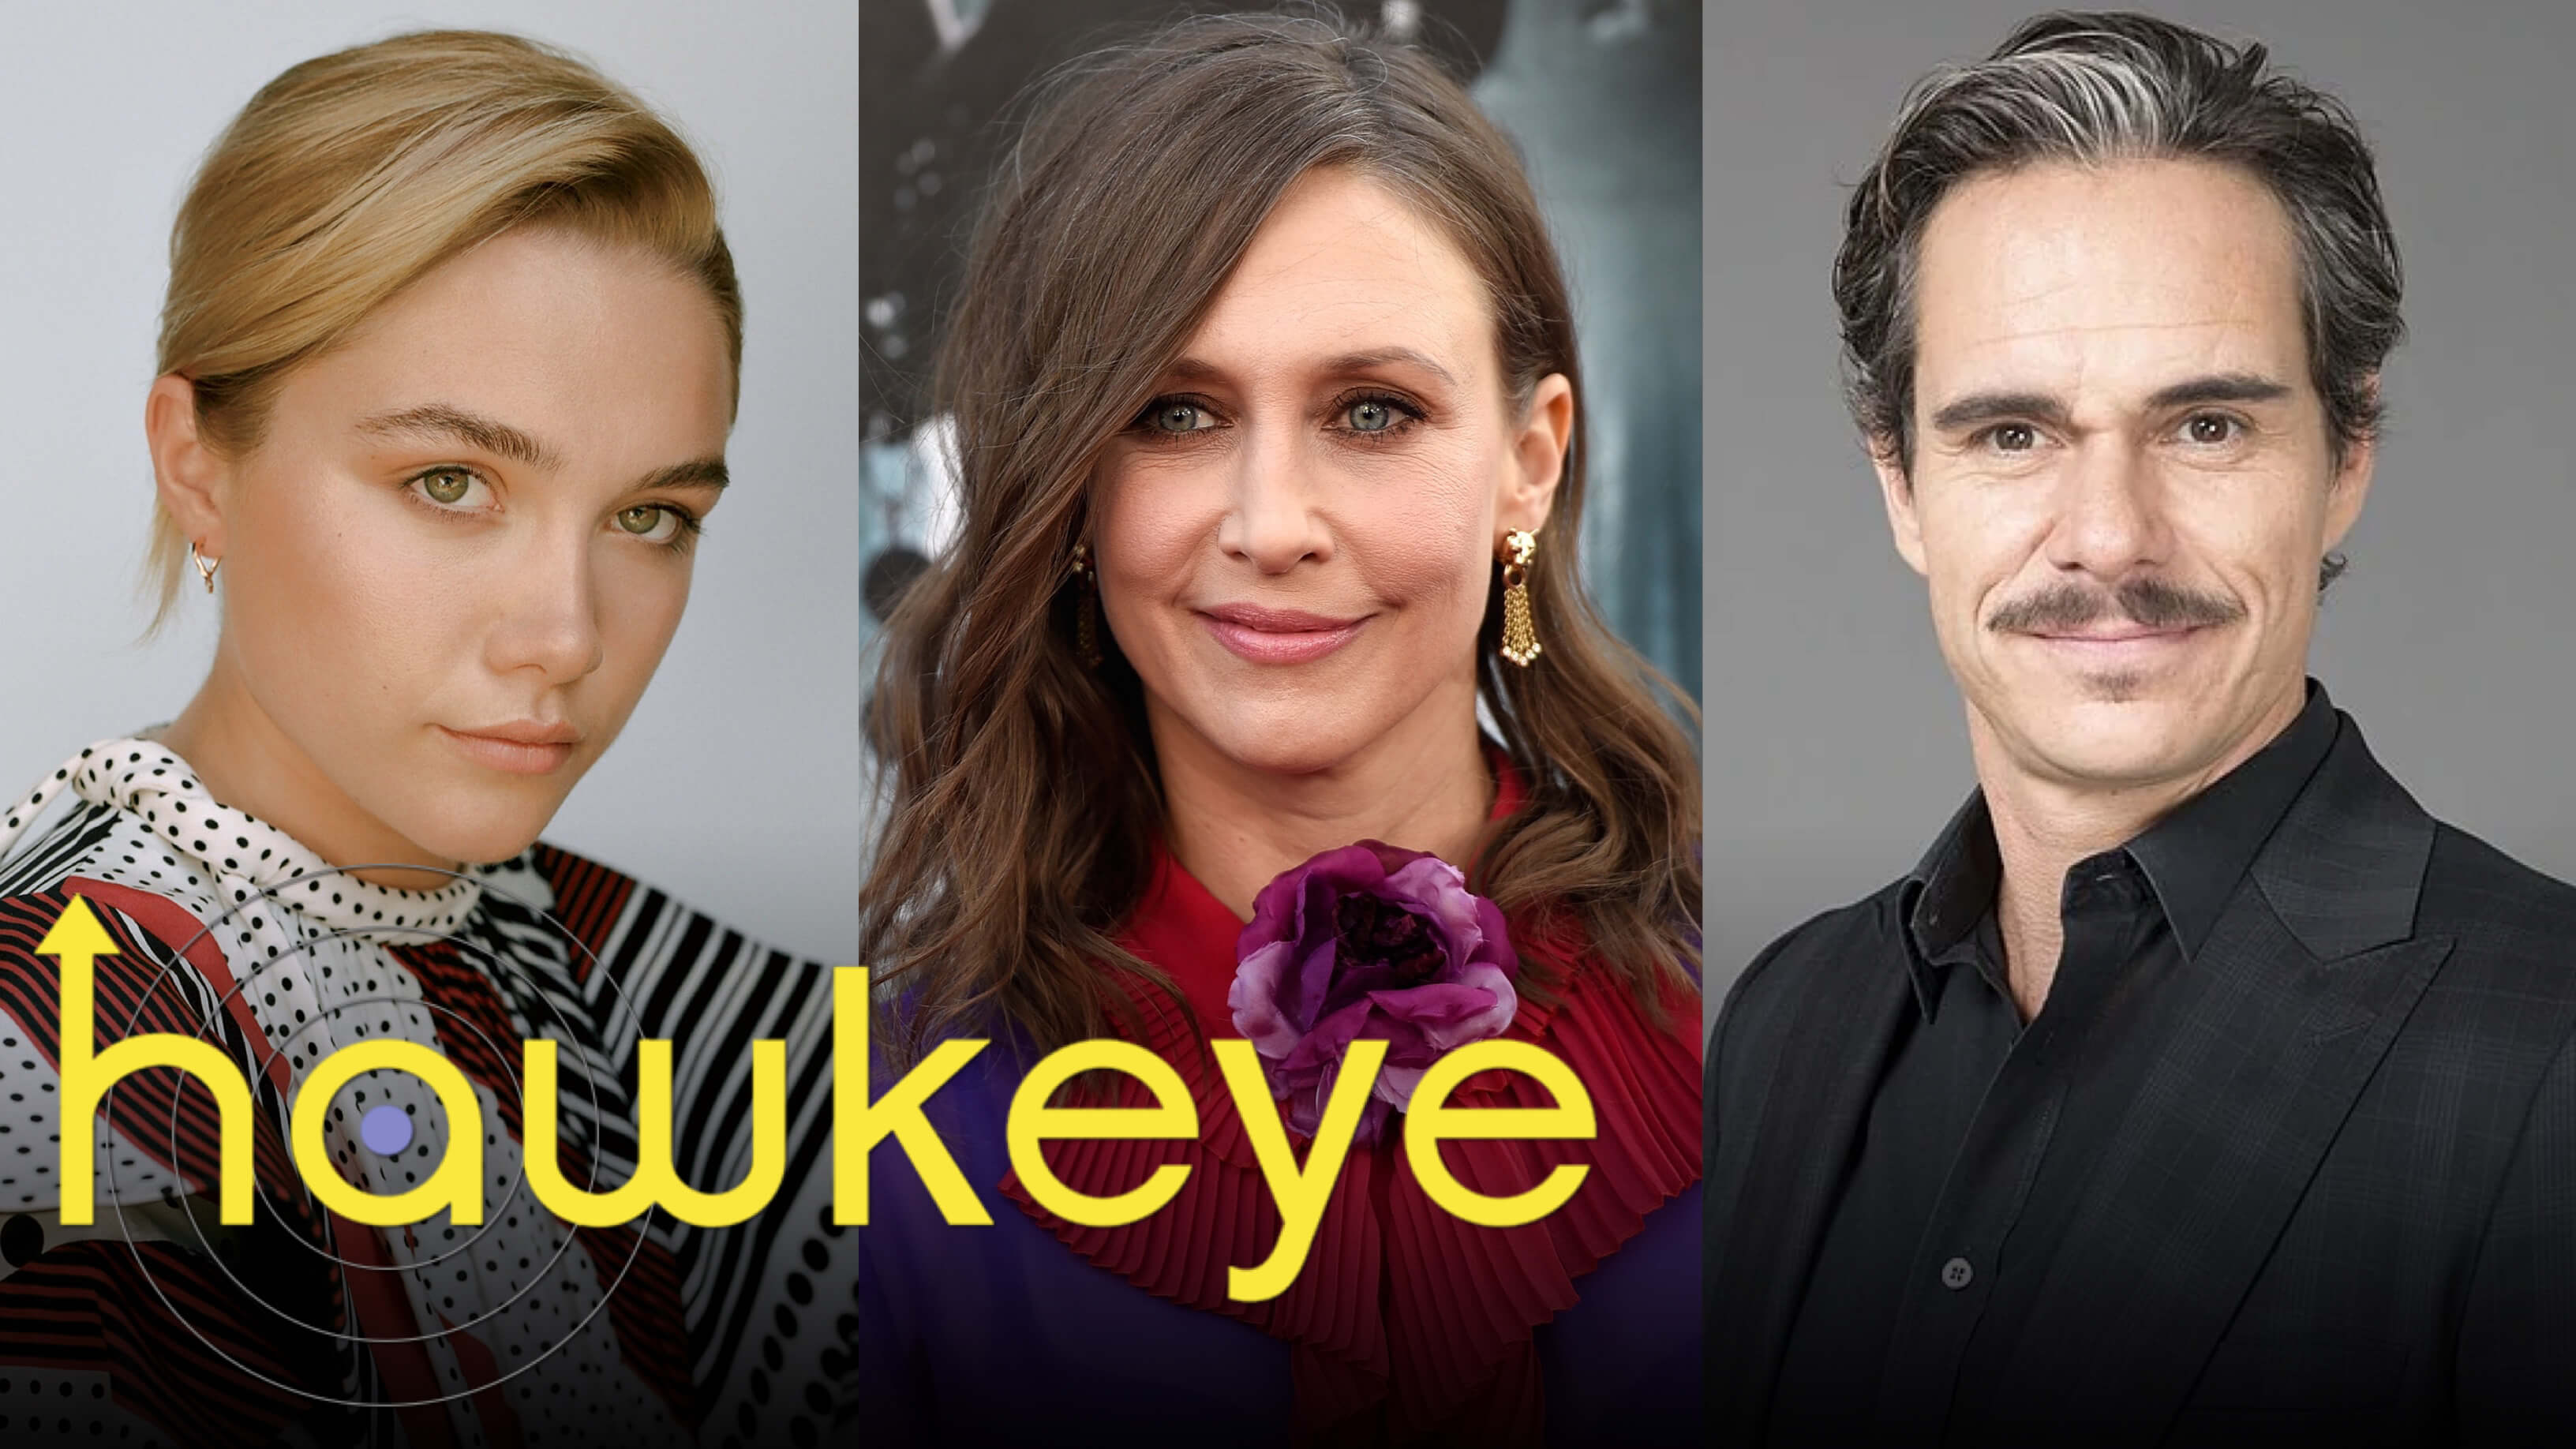 ‘Hawkeye’ Series Adds Six New Cast Members, Including Vera Farmiga And Florence Pugh